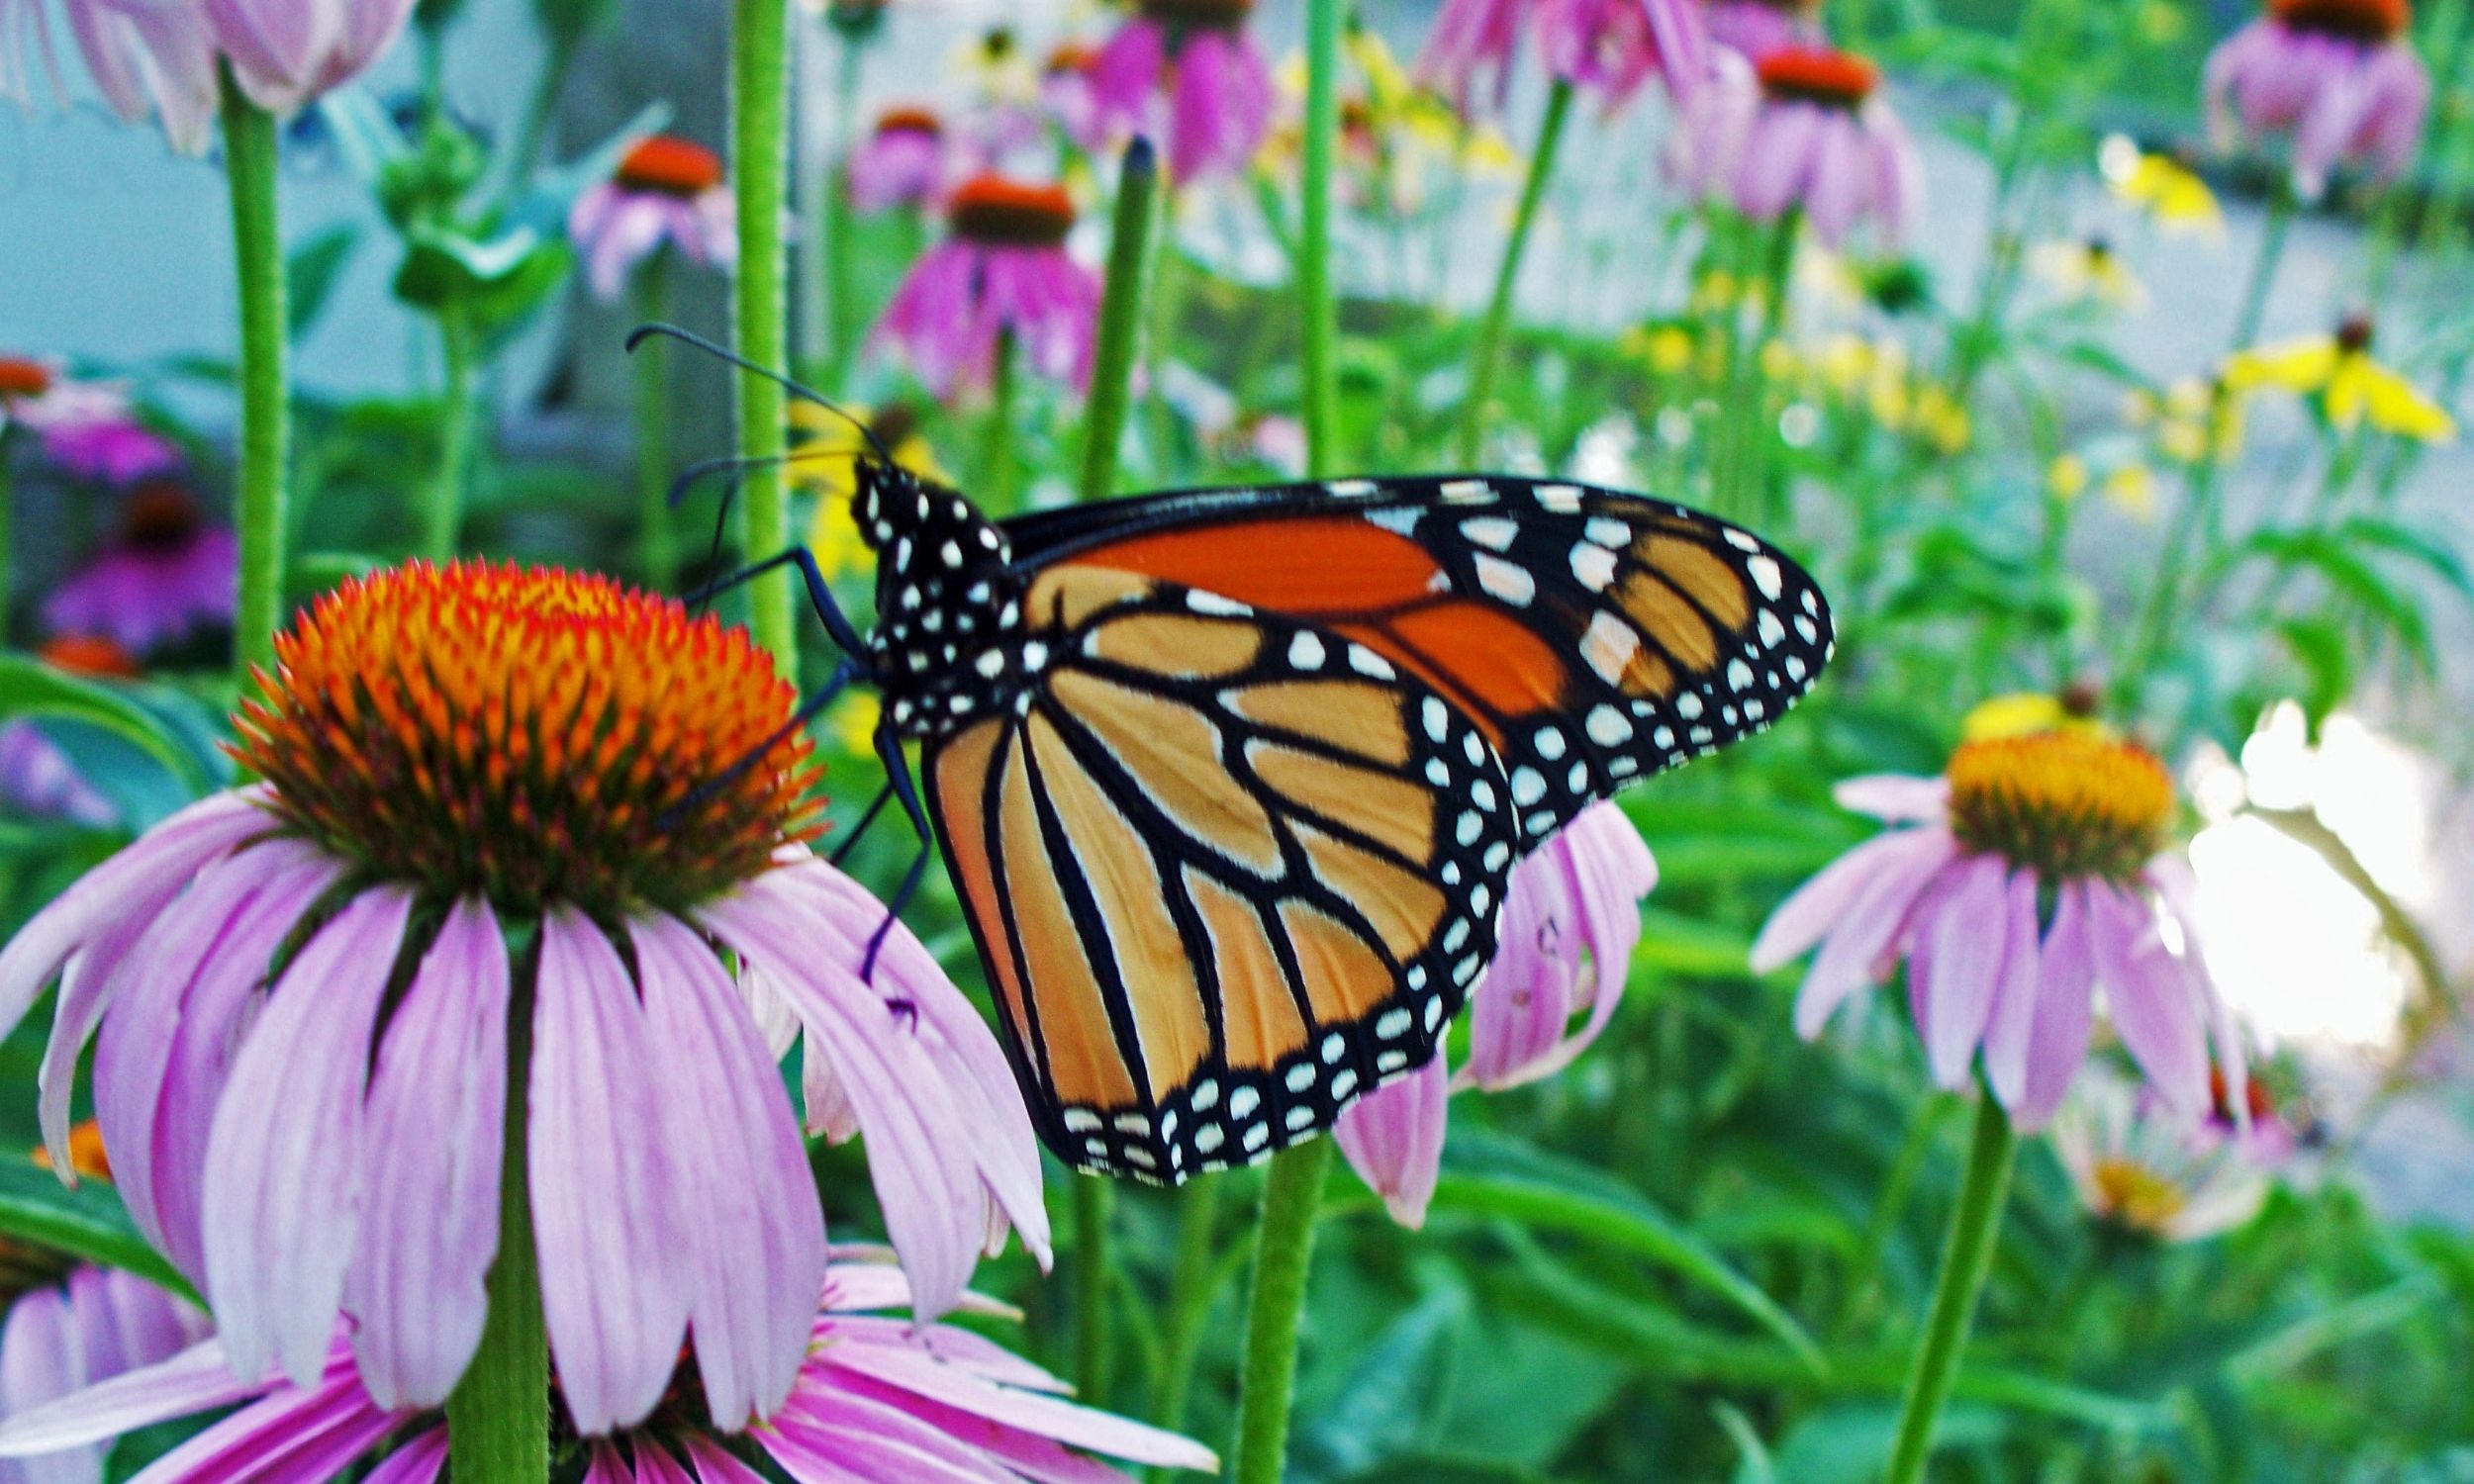 Create Your Own Pollinator Garden!